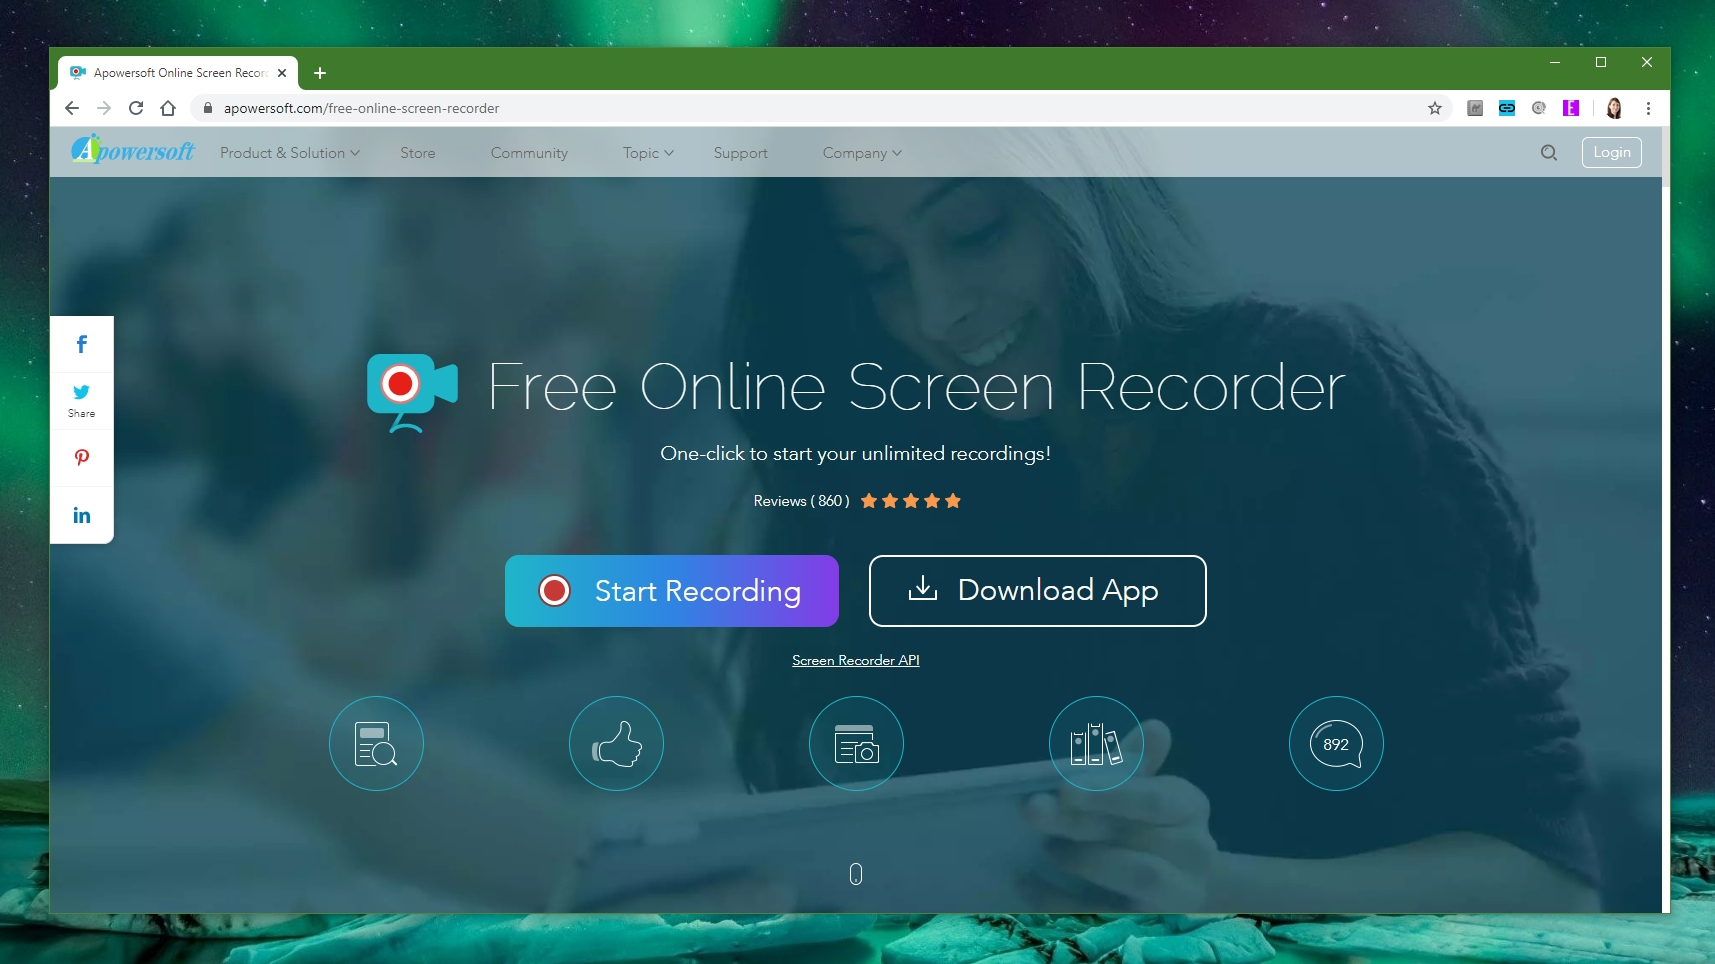 Pure telex Eligibility Apowersoft Free Online Screen Recorder review | TechRadar